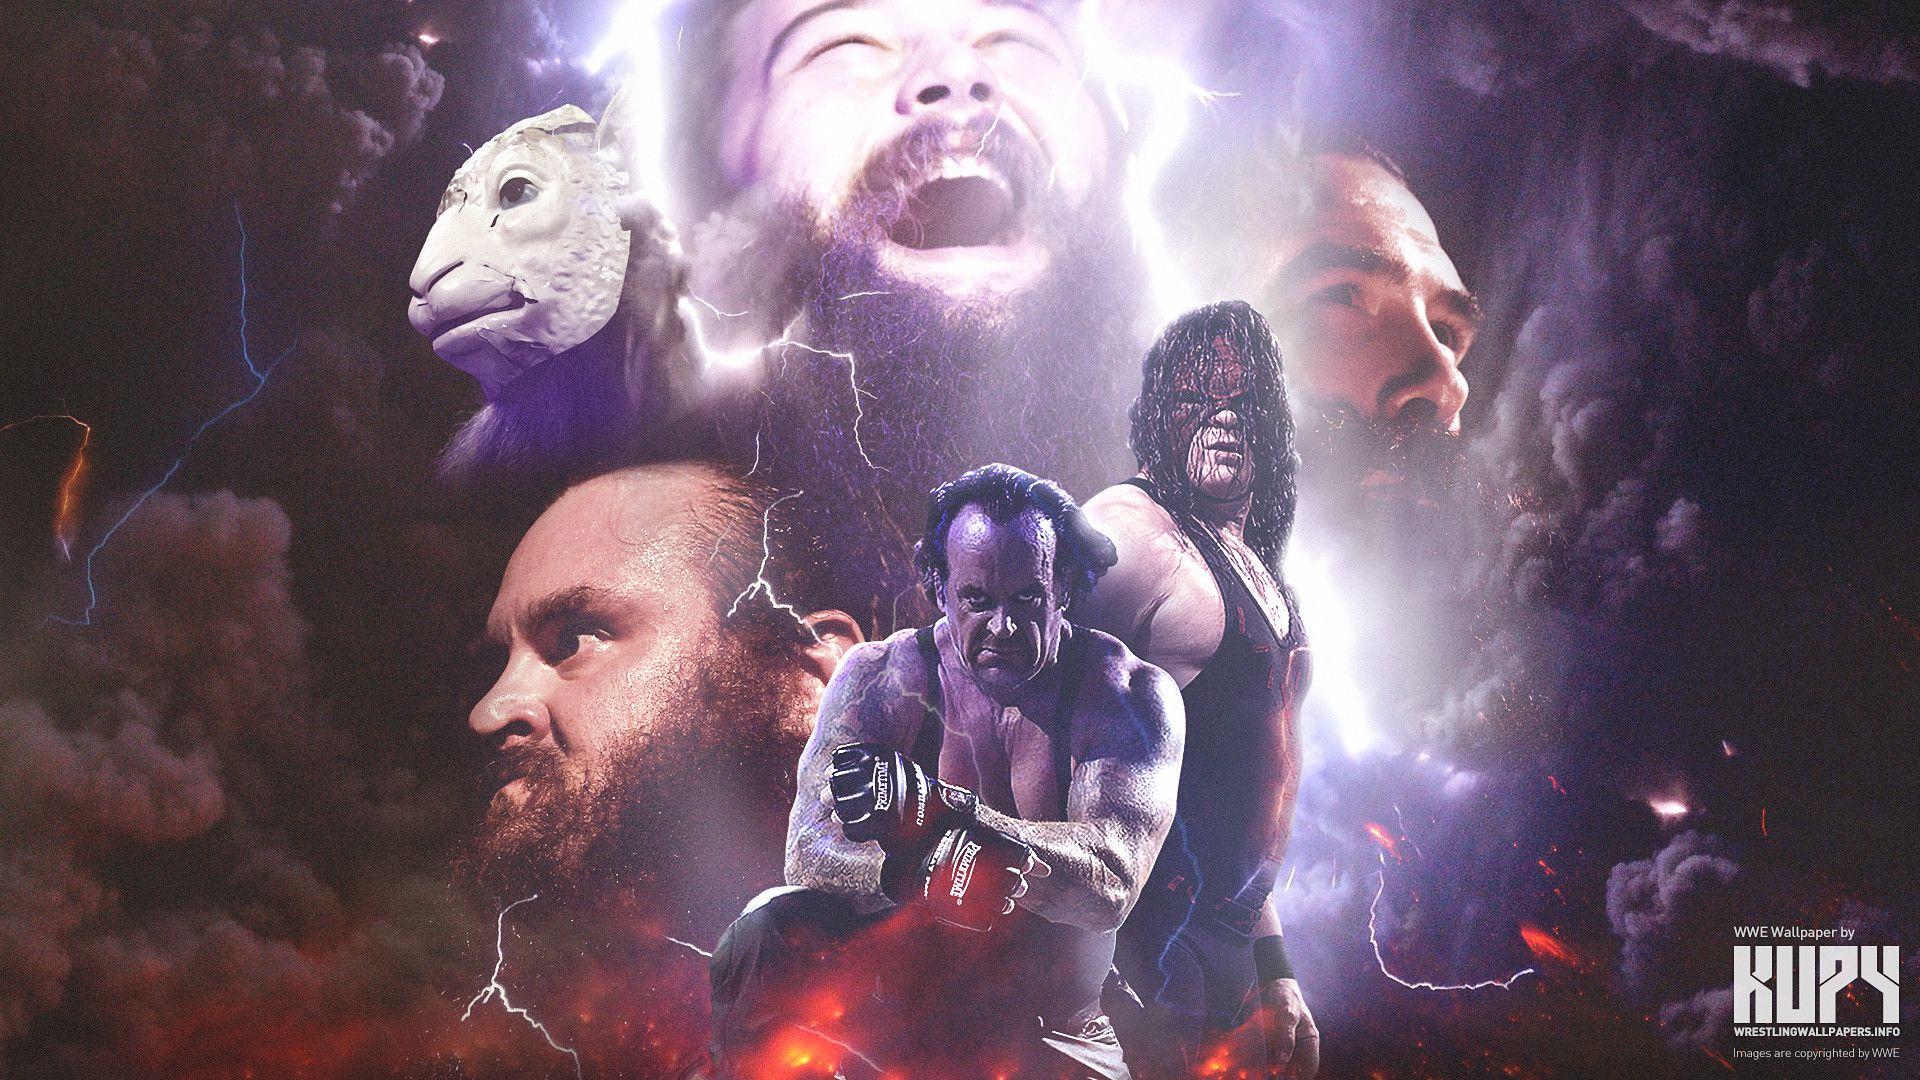 NEW The Undertaker 21  0 wallpaper  Kupy Wrestling Wallpapers